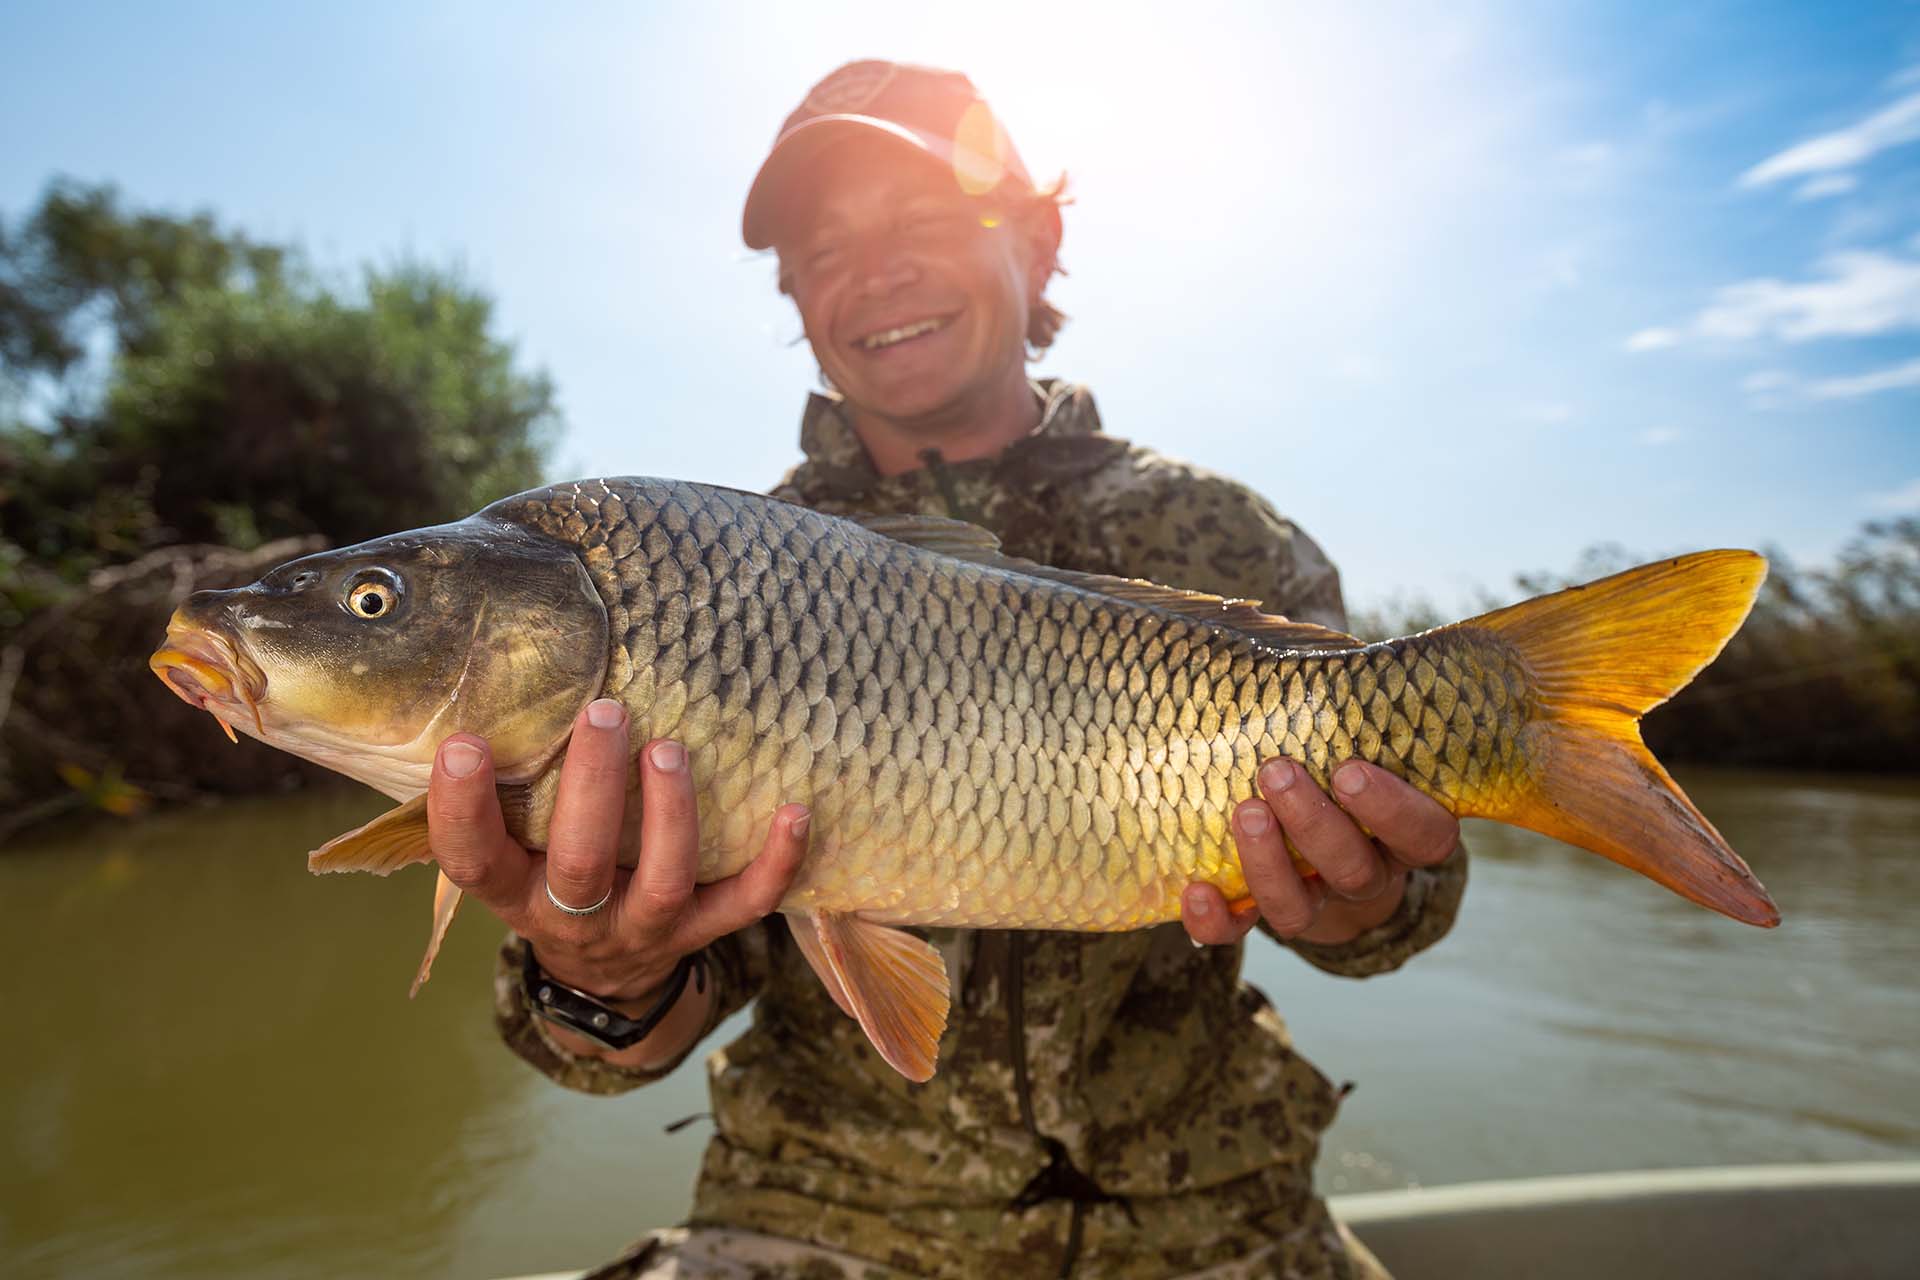 Happy angler holds big carp fish (Cyprinus carpio) and smiles. Astrakhan region, Russia